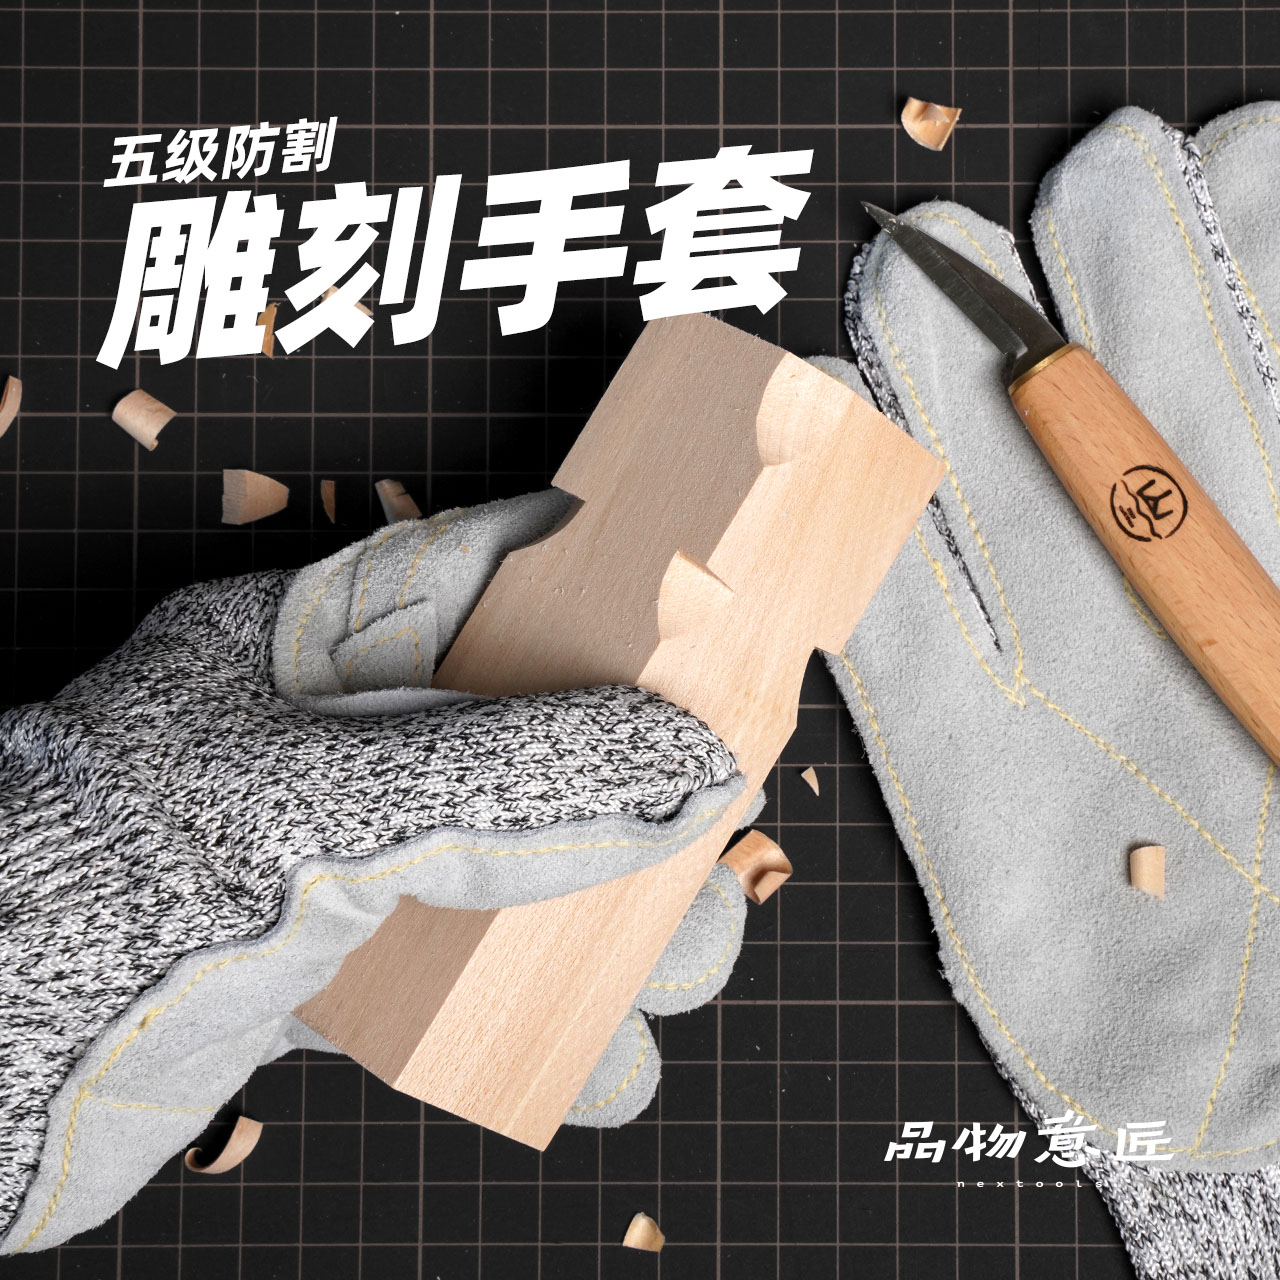 Carpentry engraving protective anti-cutting gloves wood engraving anti-wear and abrasion cut knife cut cow leather anti-bronzed artisan artisan-Taobao